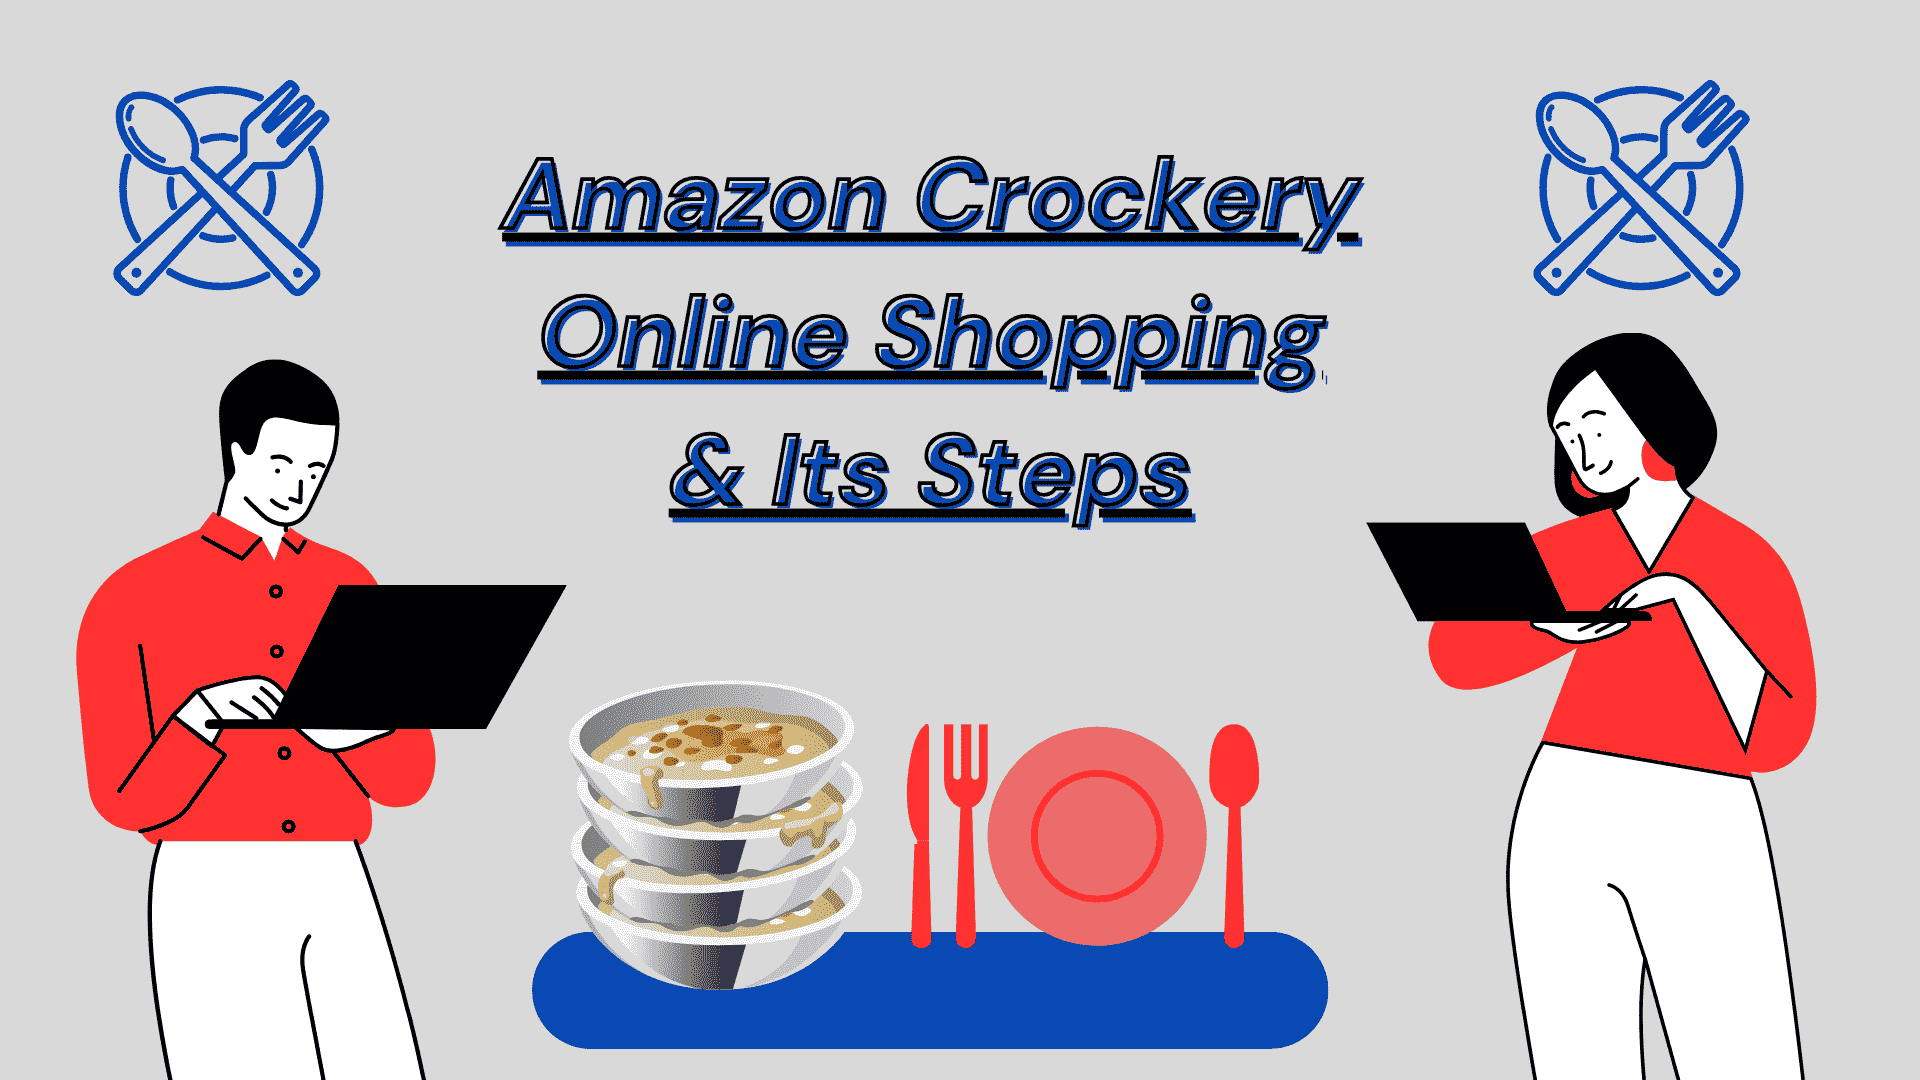 Amazon Crockery Online Shopping & Its Steps